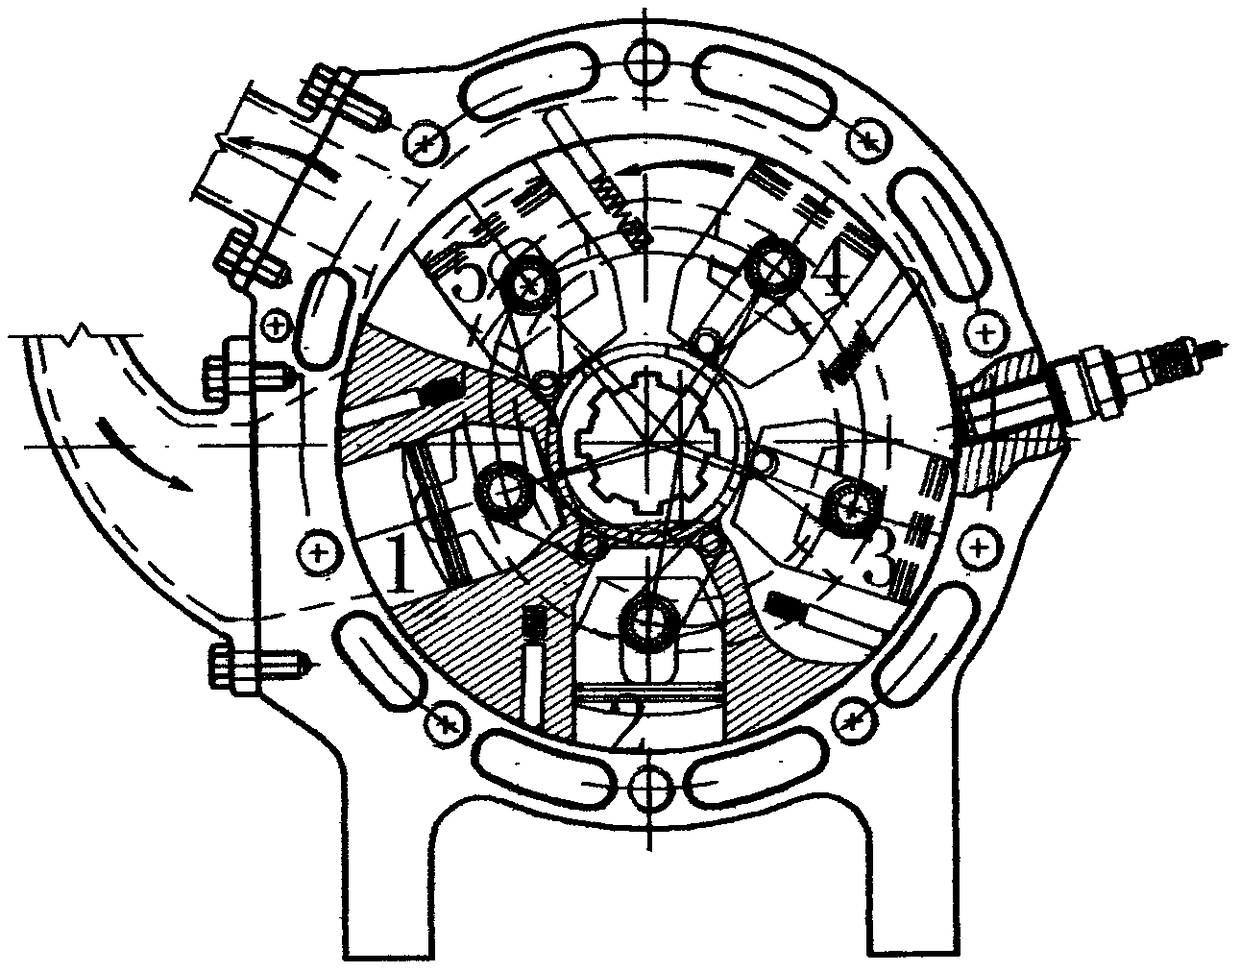 rotary piston engine